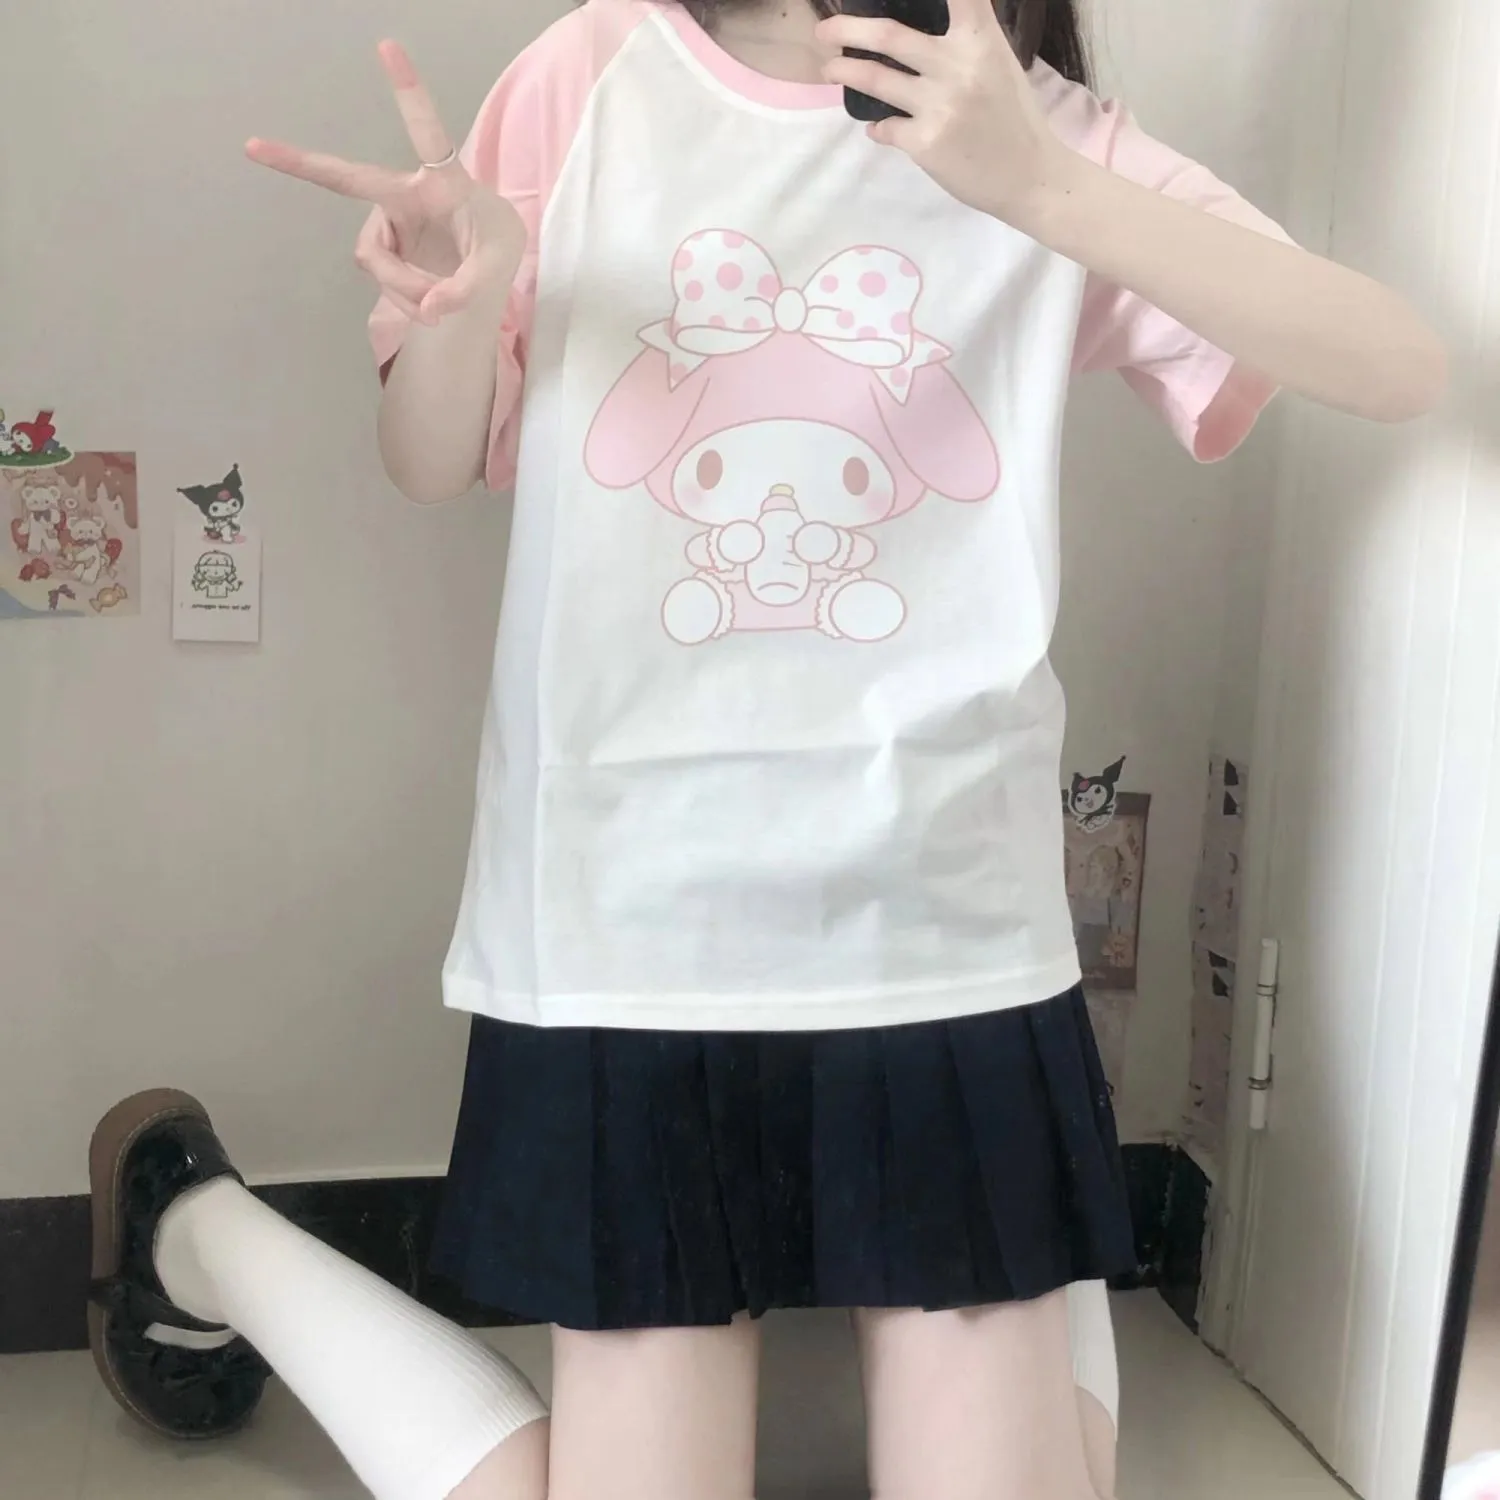 Sanrios Kawaii Anime My Melody Cute Cartoon Short sleeved T shirt Women Summer New Color Matching 2 - My Melody Plush